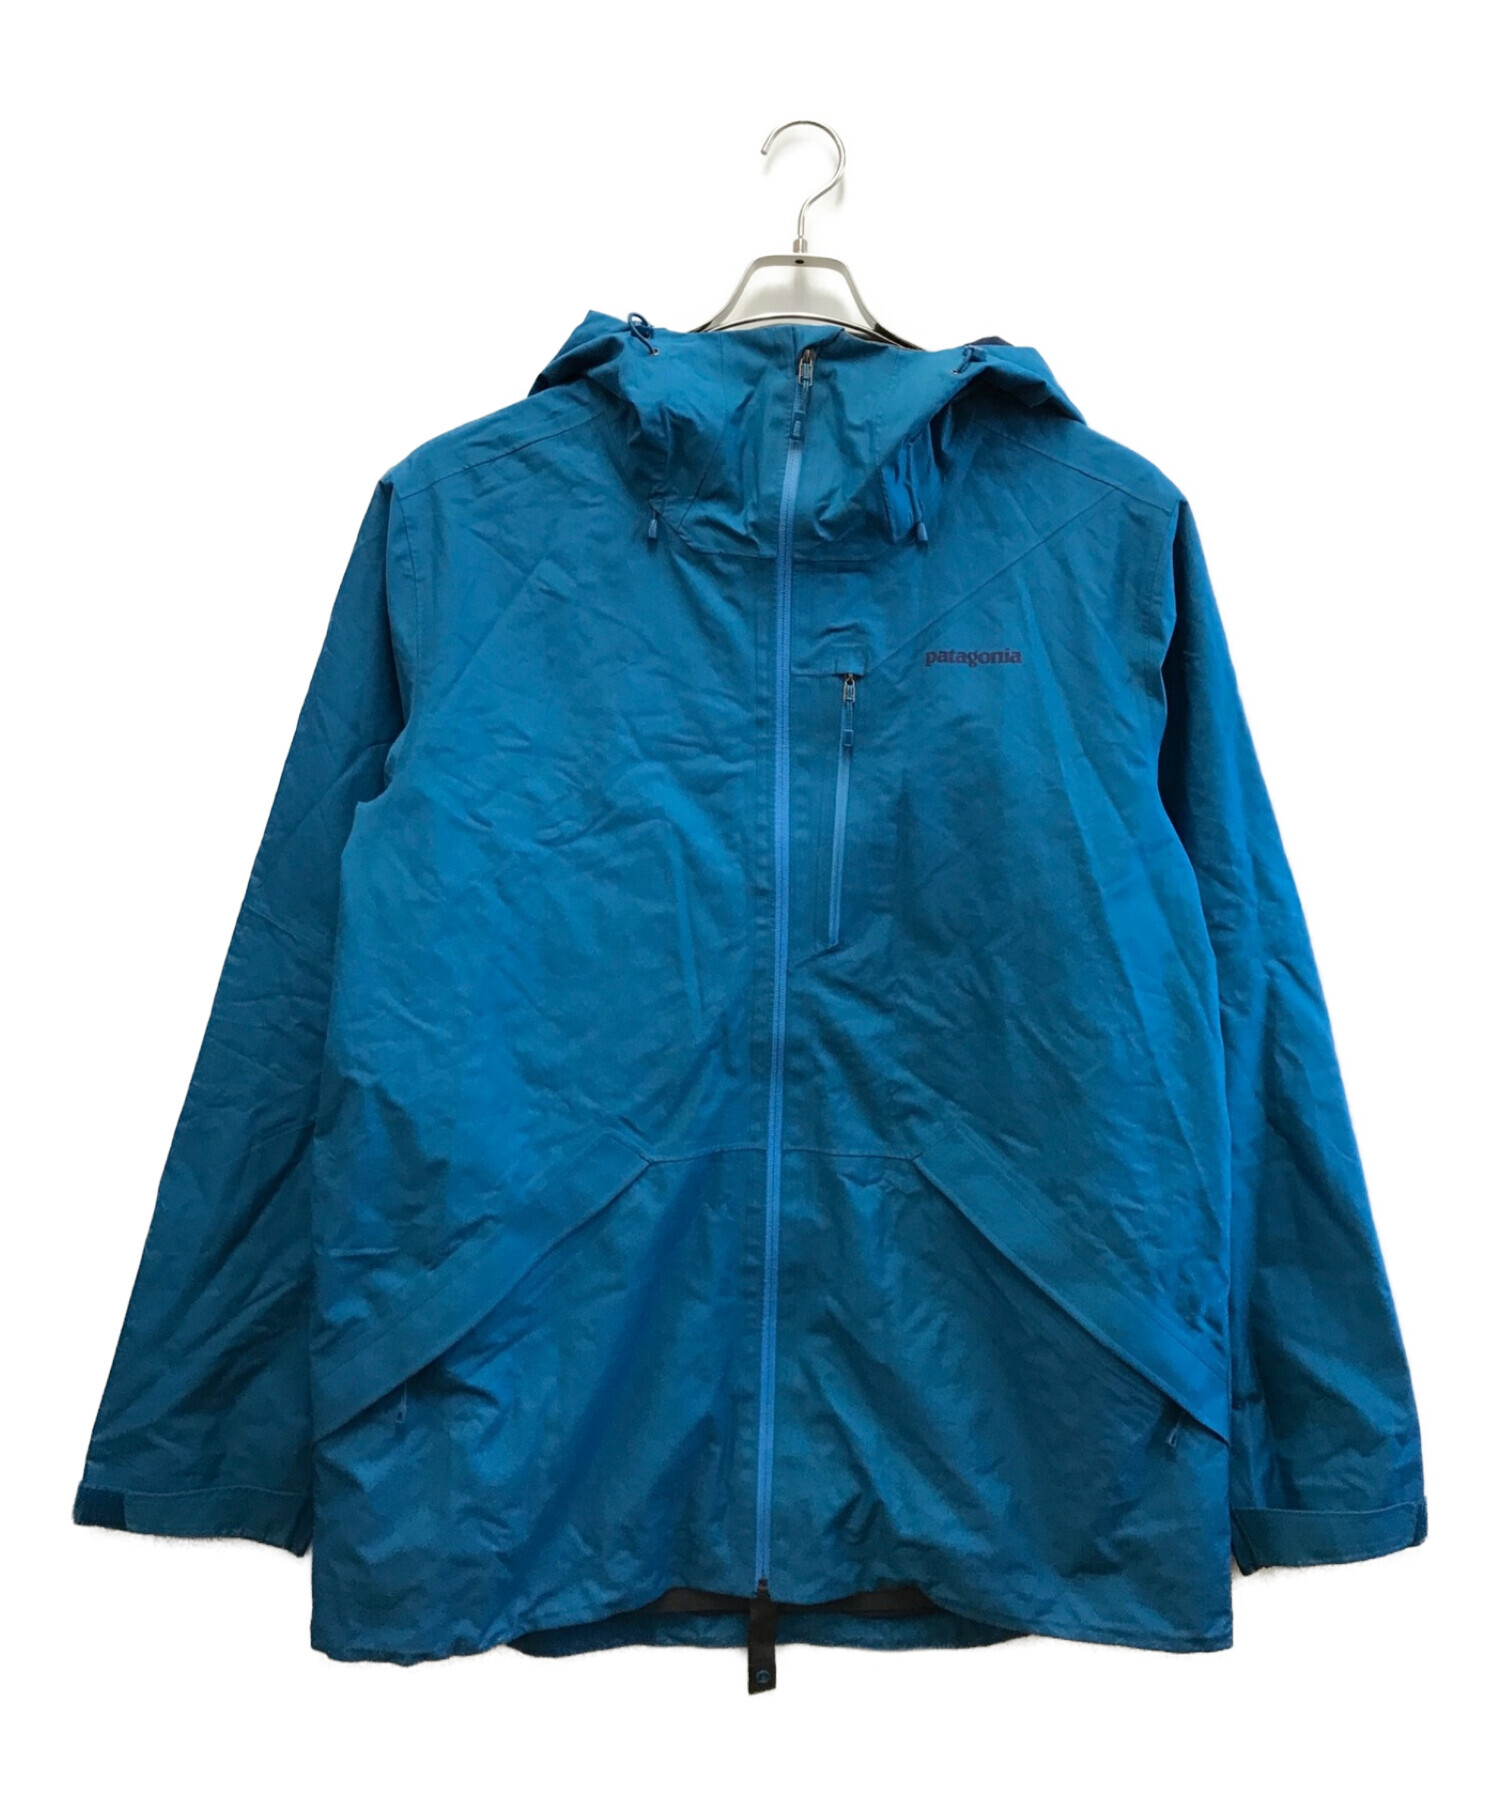 Patagonia (パタゴニア) スノーショットジャケット ブルー サイズ:XL